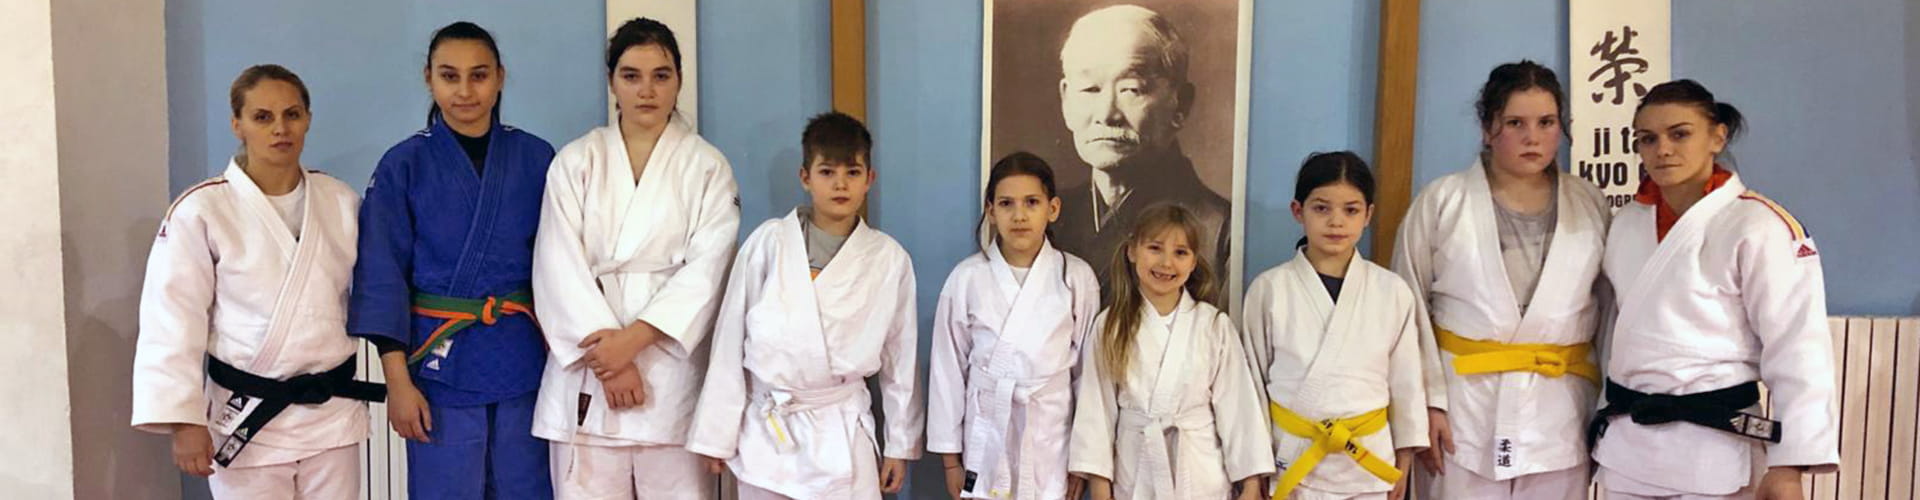 judo-team